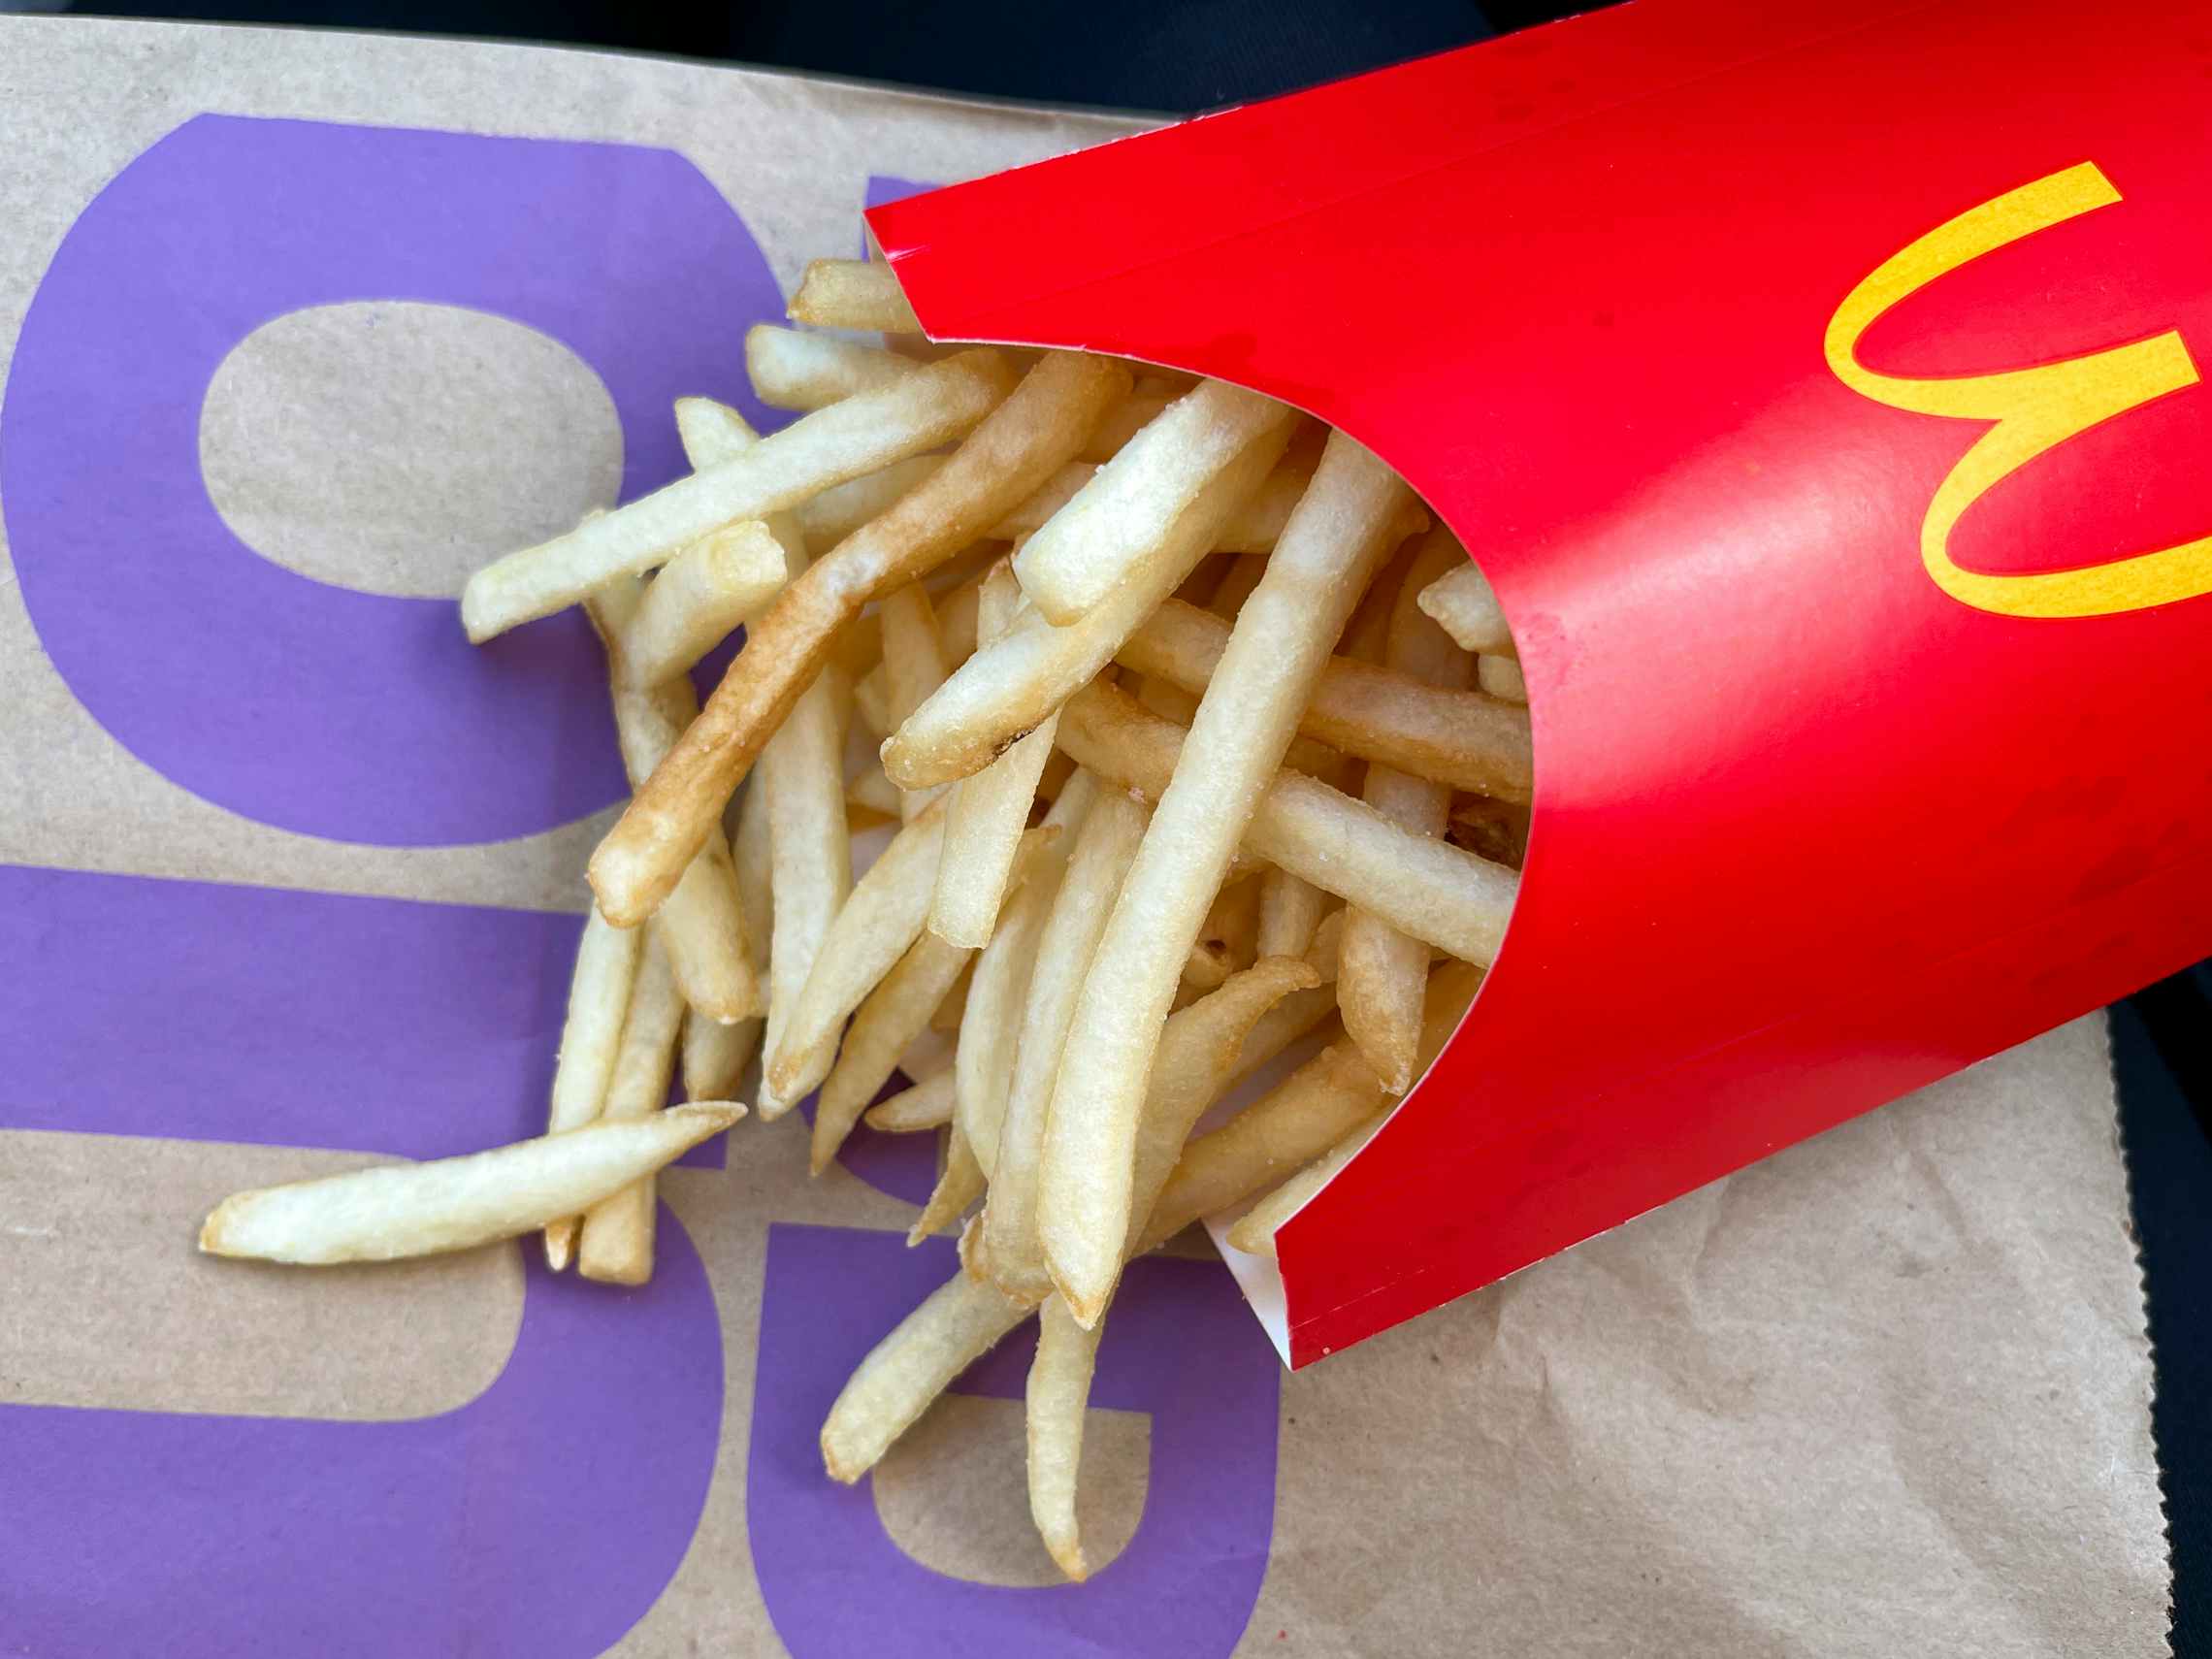 A close-up of a box of McDonald's fries lying on a McDonald's bag.